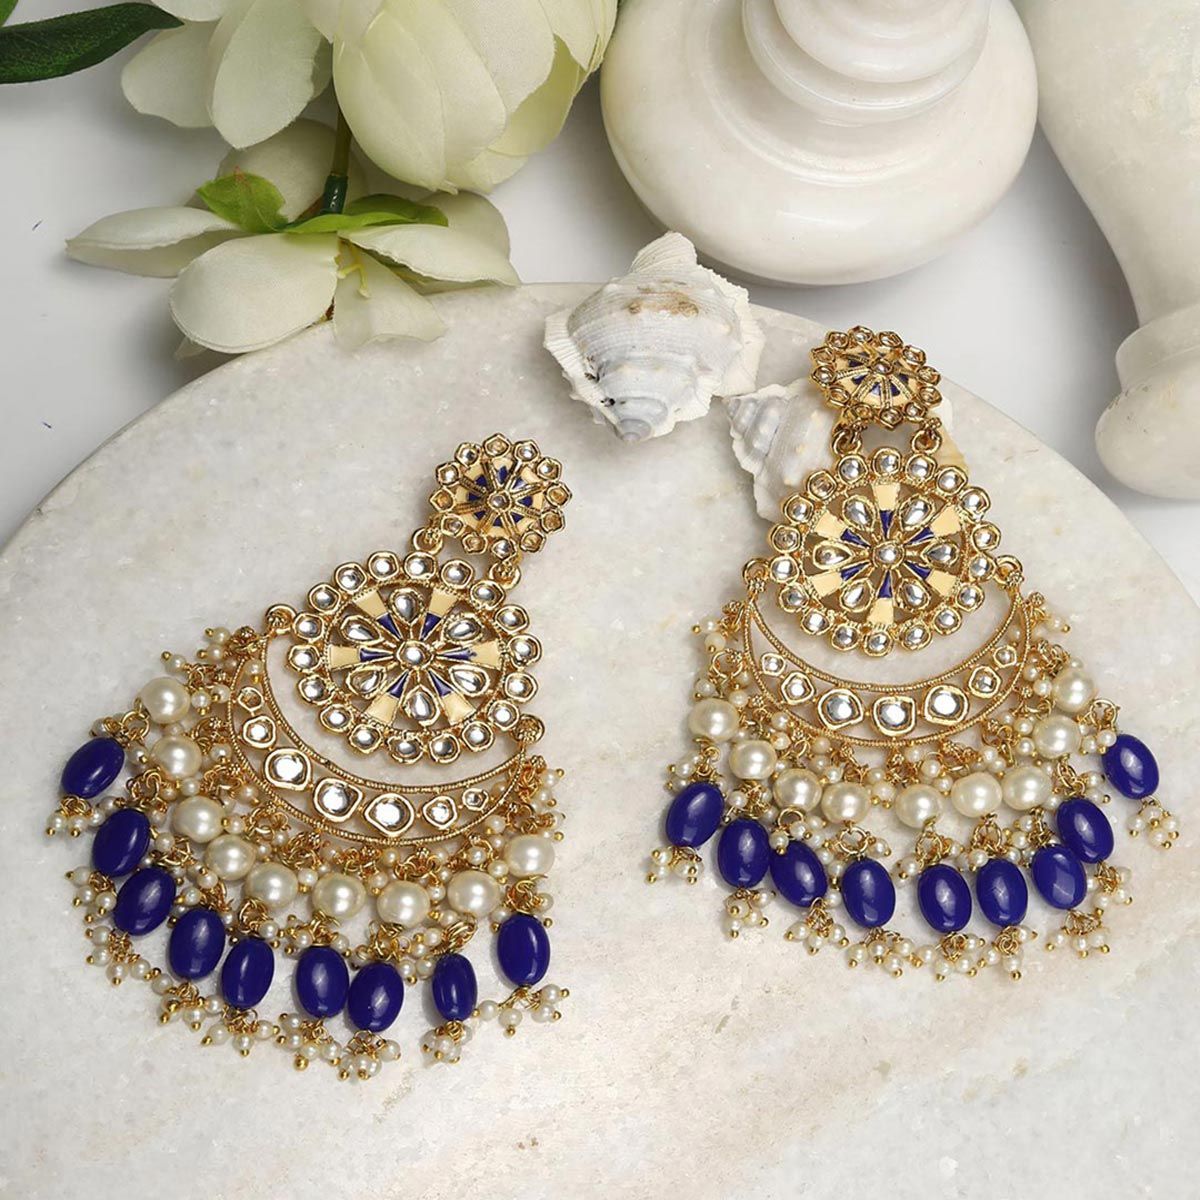 Details more than 74 kundan chandbali earrings online india super hot